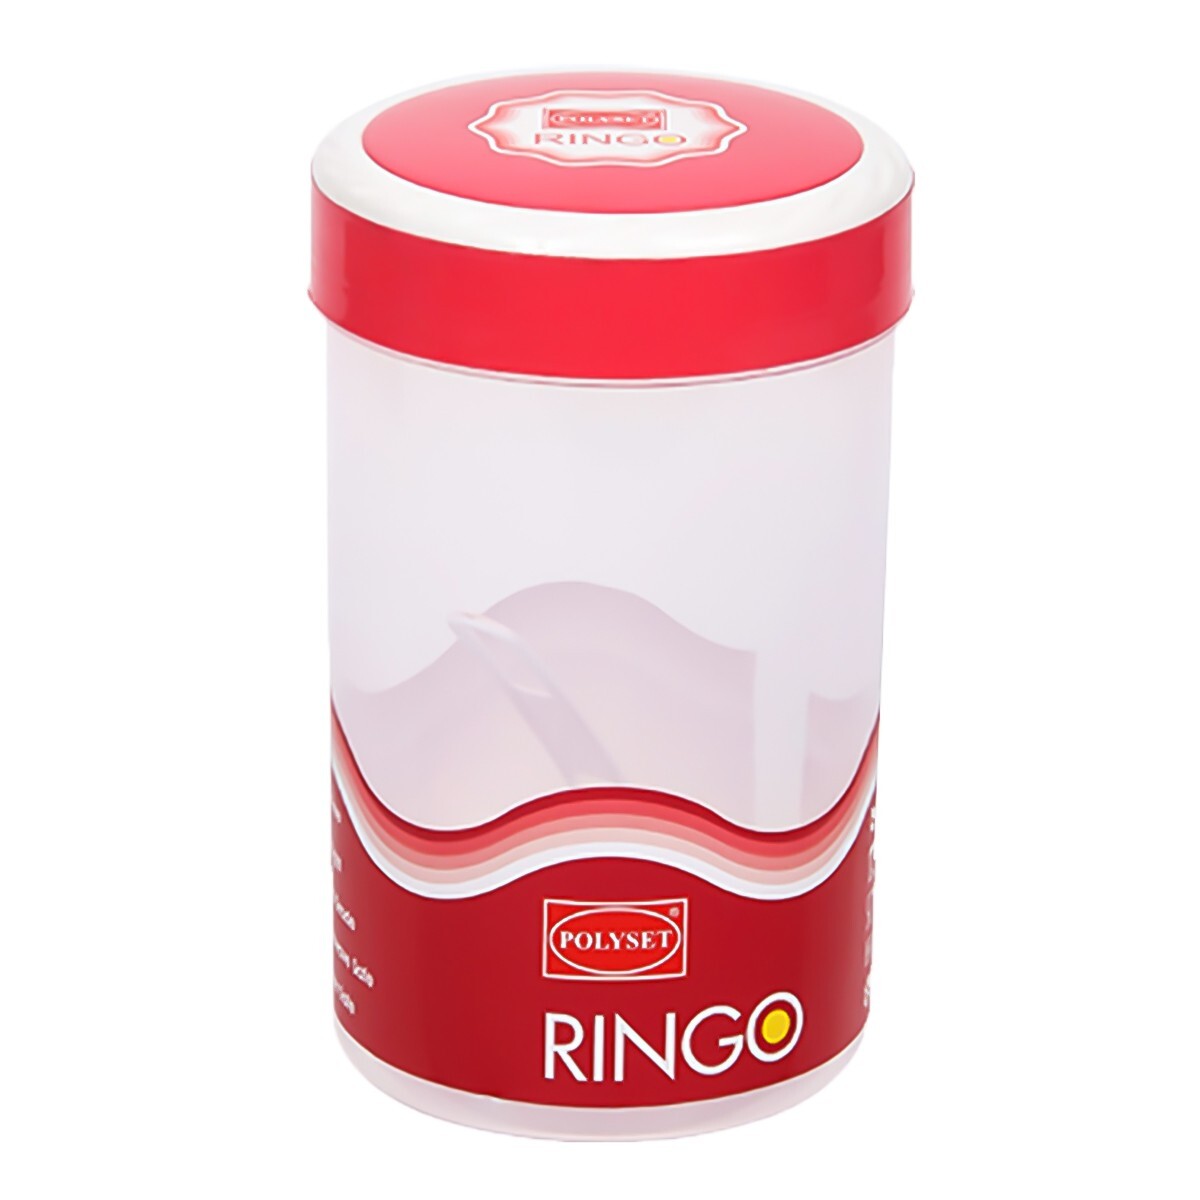 Polyset Ringo Container 1475 3Pc